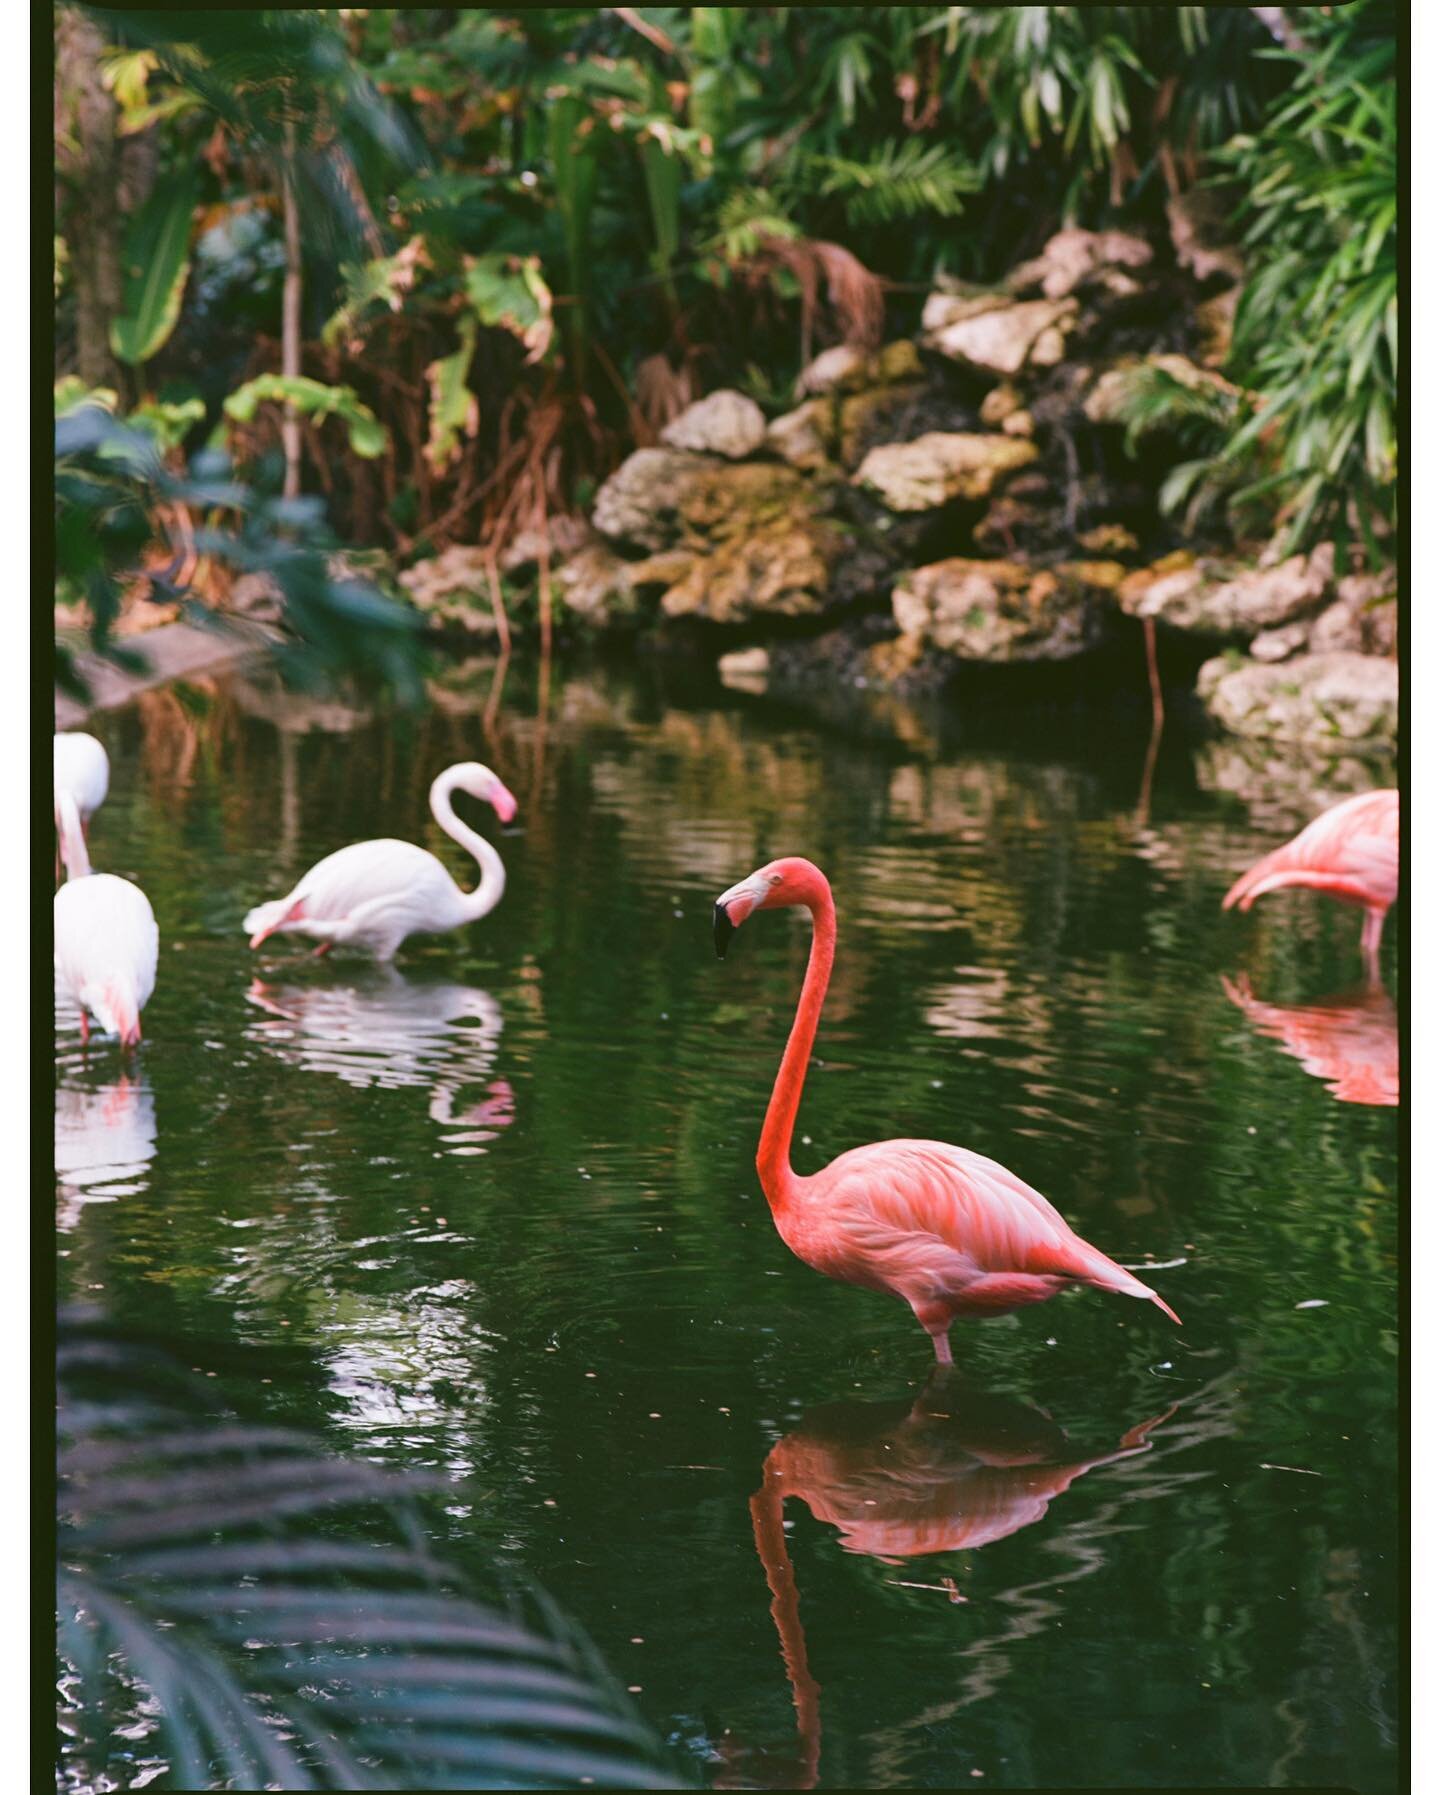 🦩 Flamingo Gardens / Shot on Ektar 100, Medium Format Film. 

#flamingogardens #flamingo #flamingos #alligator #turtles #floridawildlife #florida #southflorida #miami #fortlauderdale